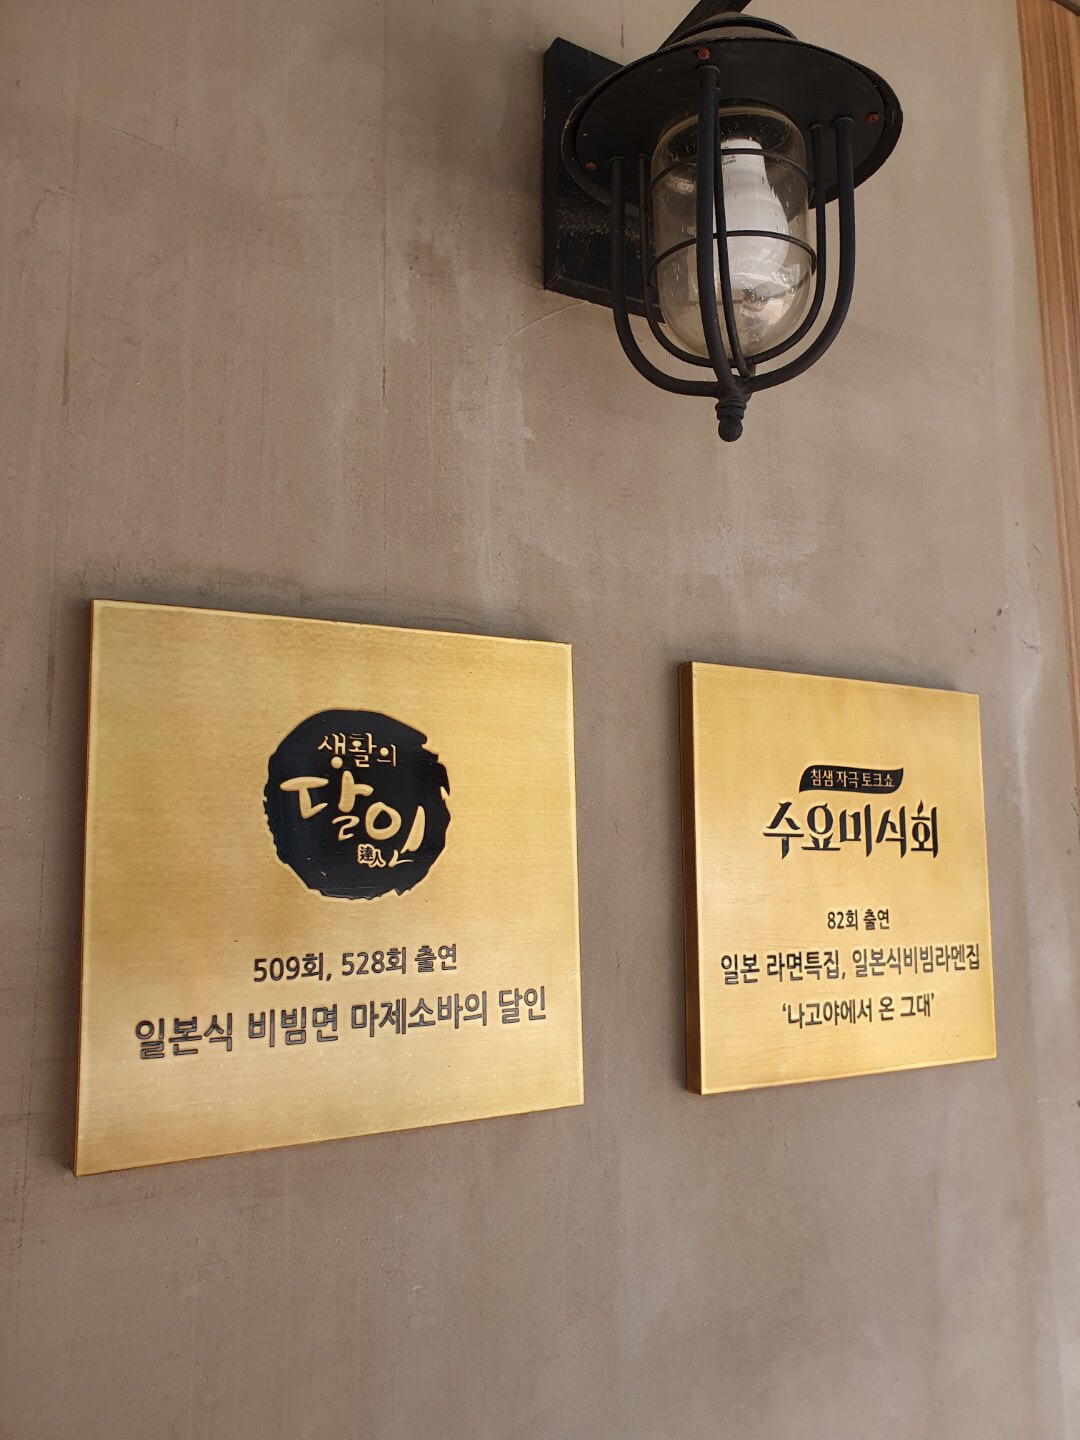 KakaoTalk_Image_2020-07-26-17-16-04_002.jpg (스압) 서울 강남 지역 음식점 방문기 -5-